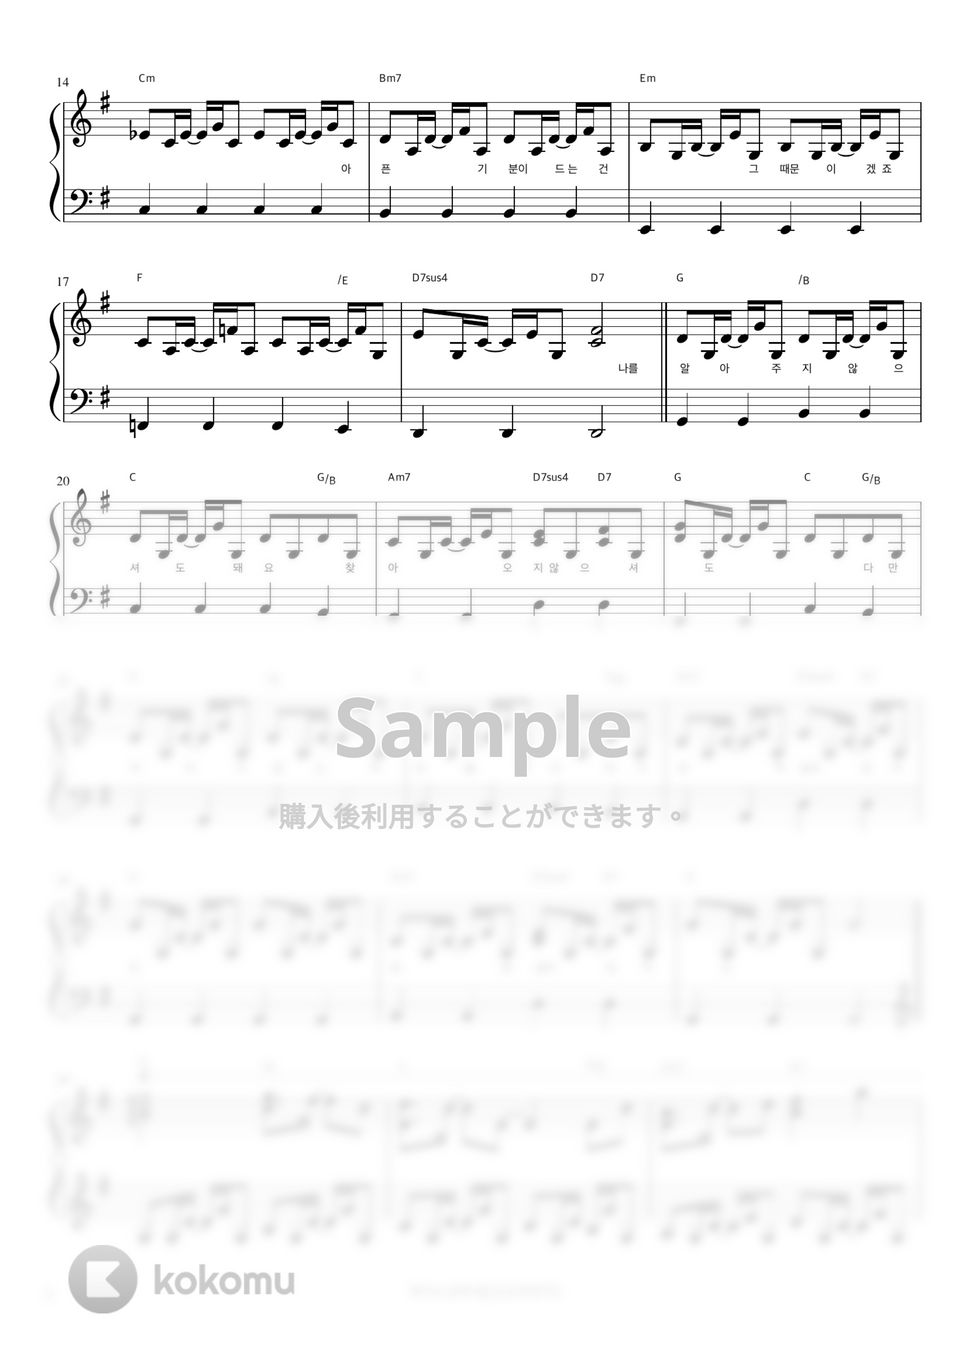 IU - Heart (伴奏楽譜) by 피아노정류장